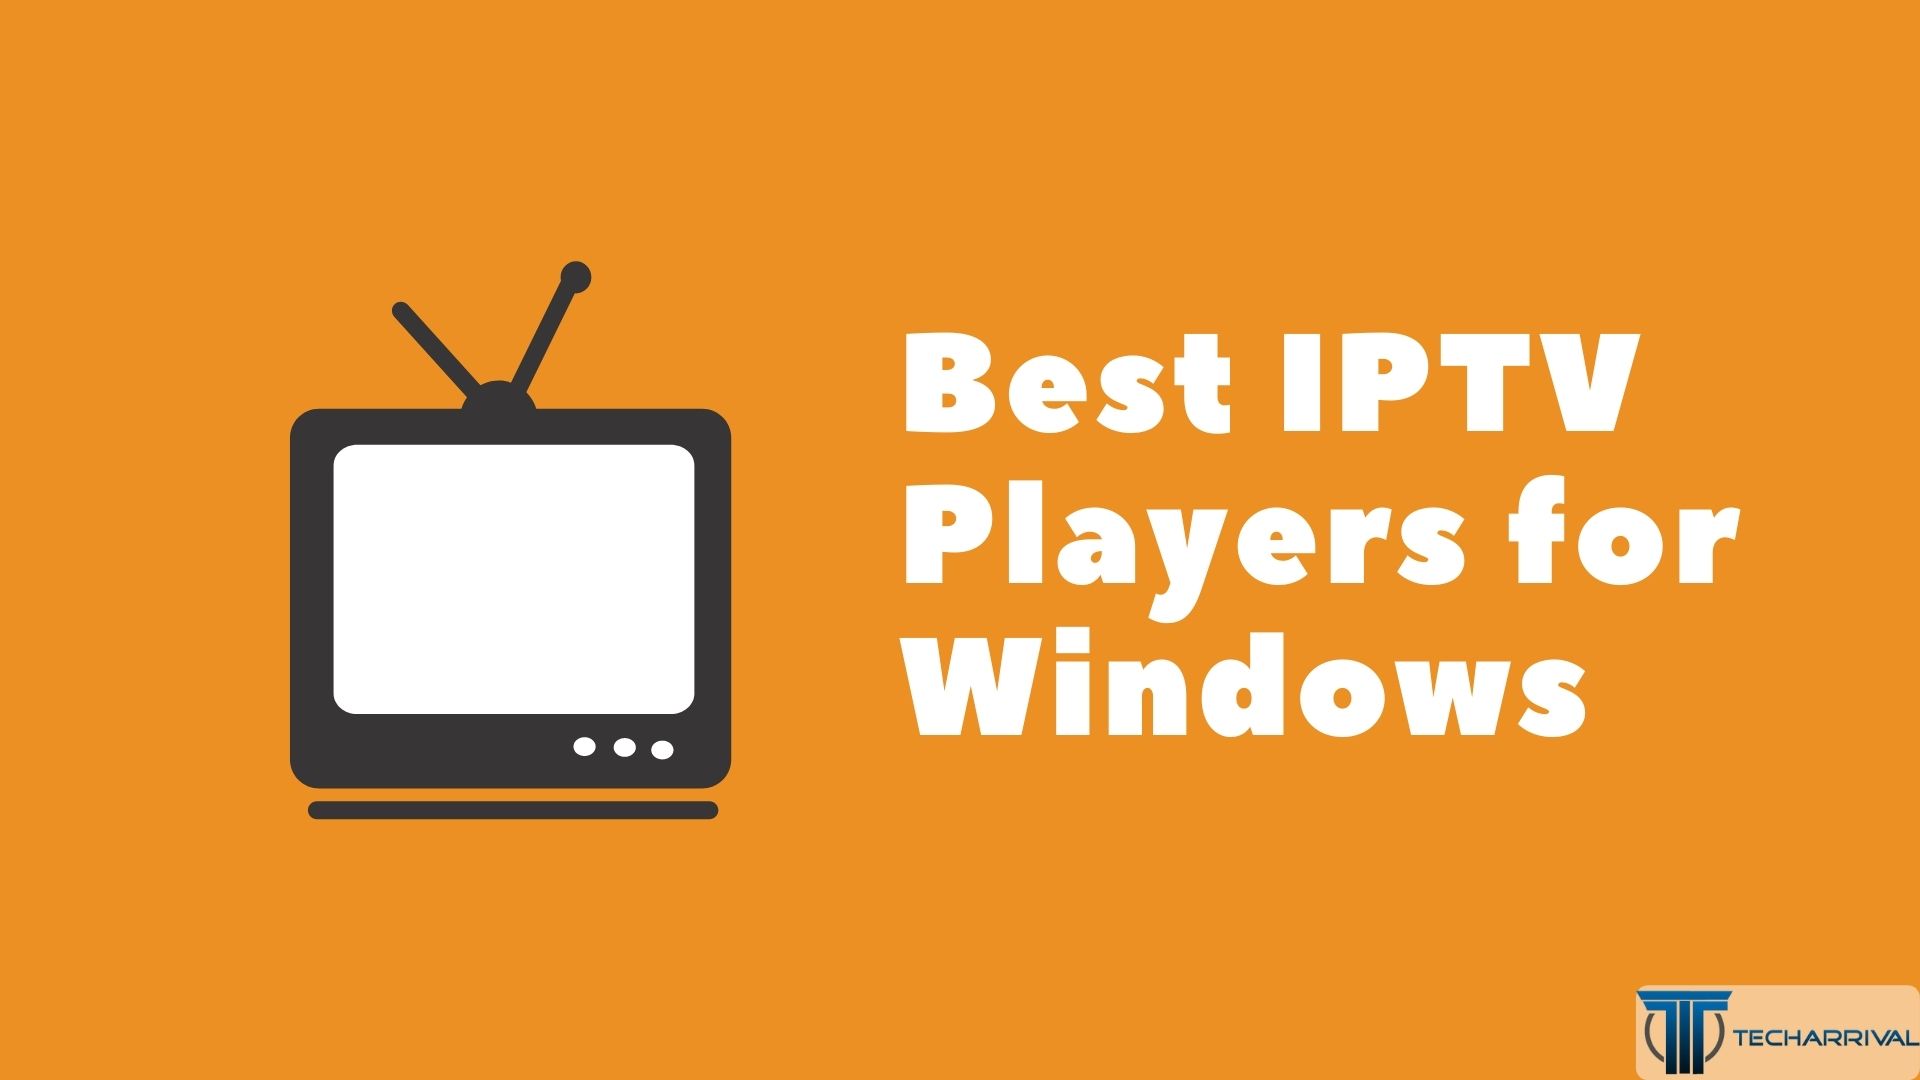 windows 10 best iptv player